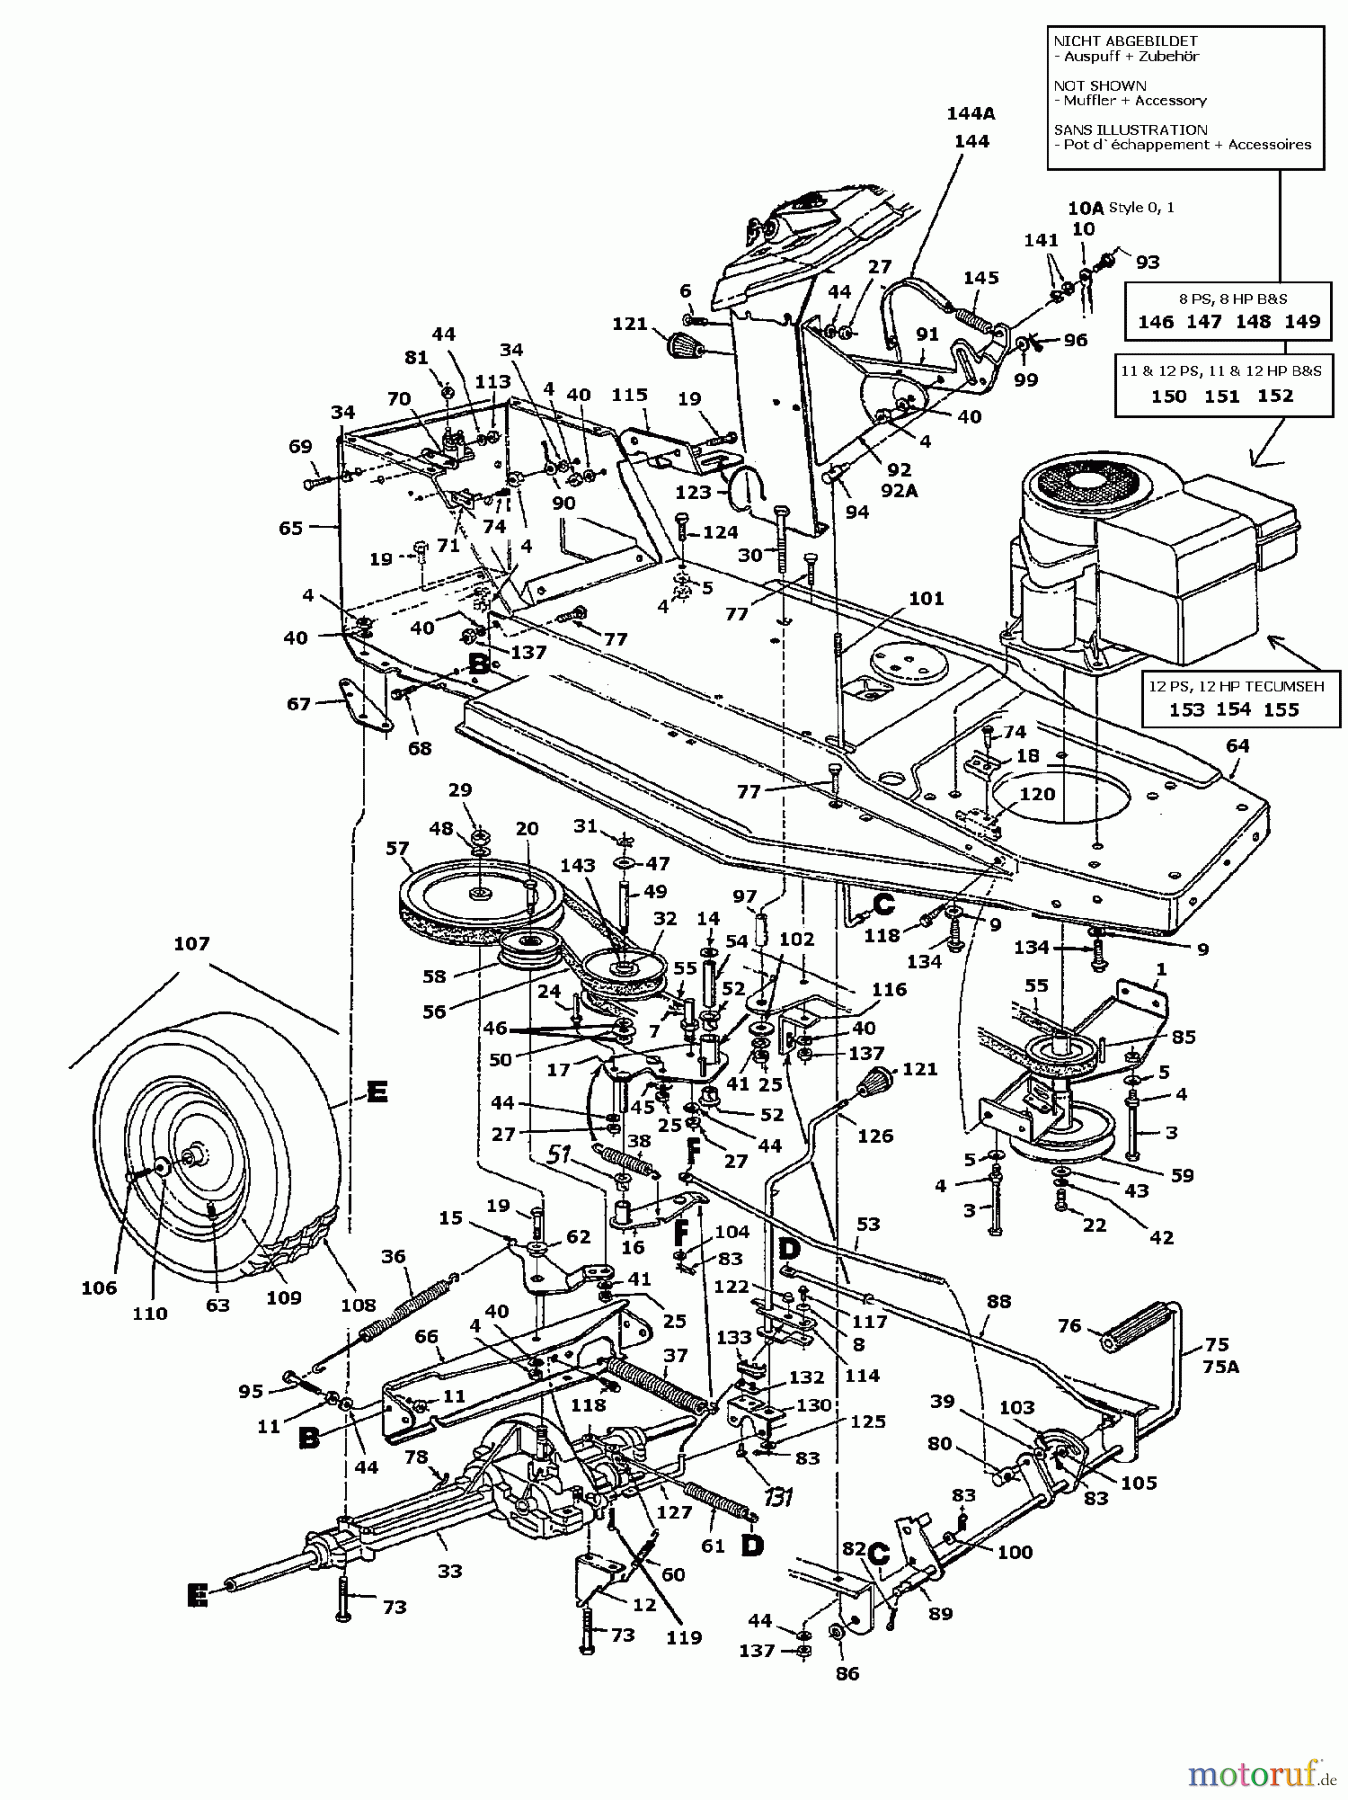  Bauhaus Lawn tractors Gardol Topcut 12/91 133I471E646  (1993) Drive system, Engine pulley, Pedal, Rear wheels